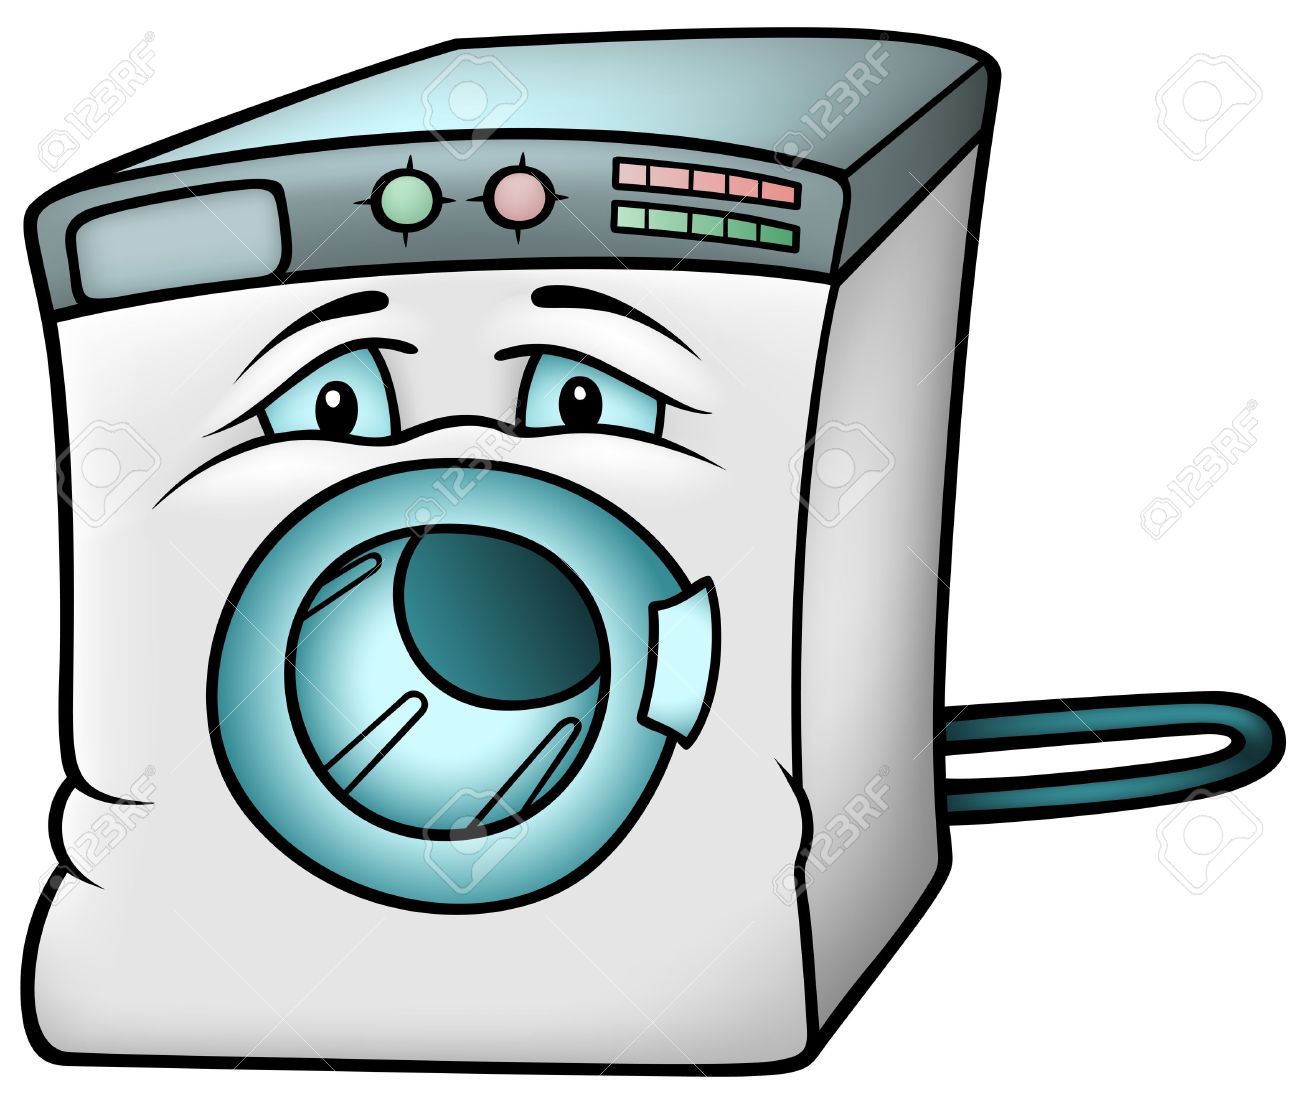 Washing Machine Clip Art Clip